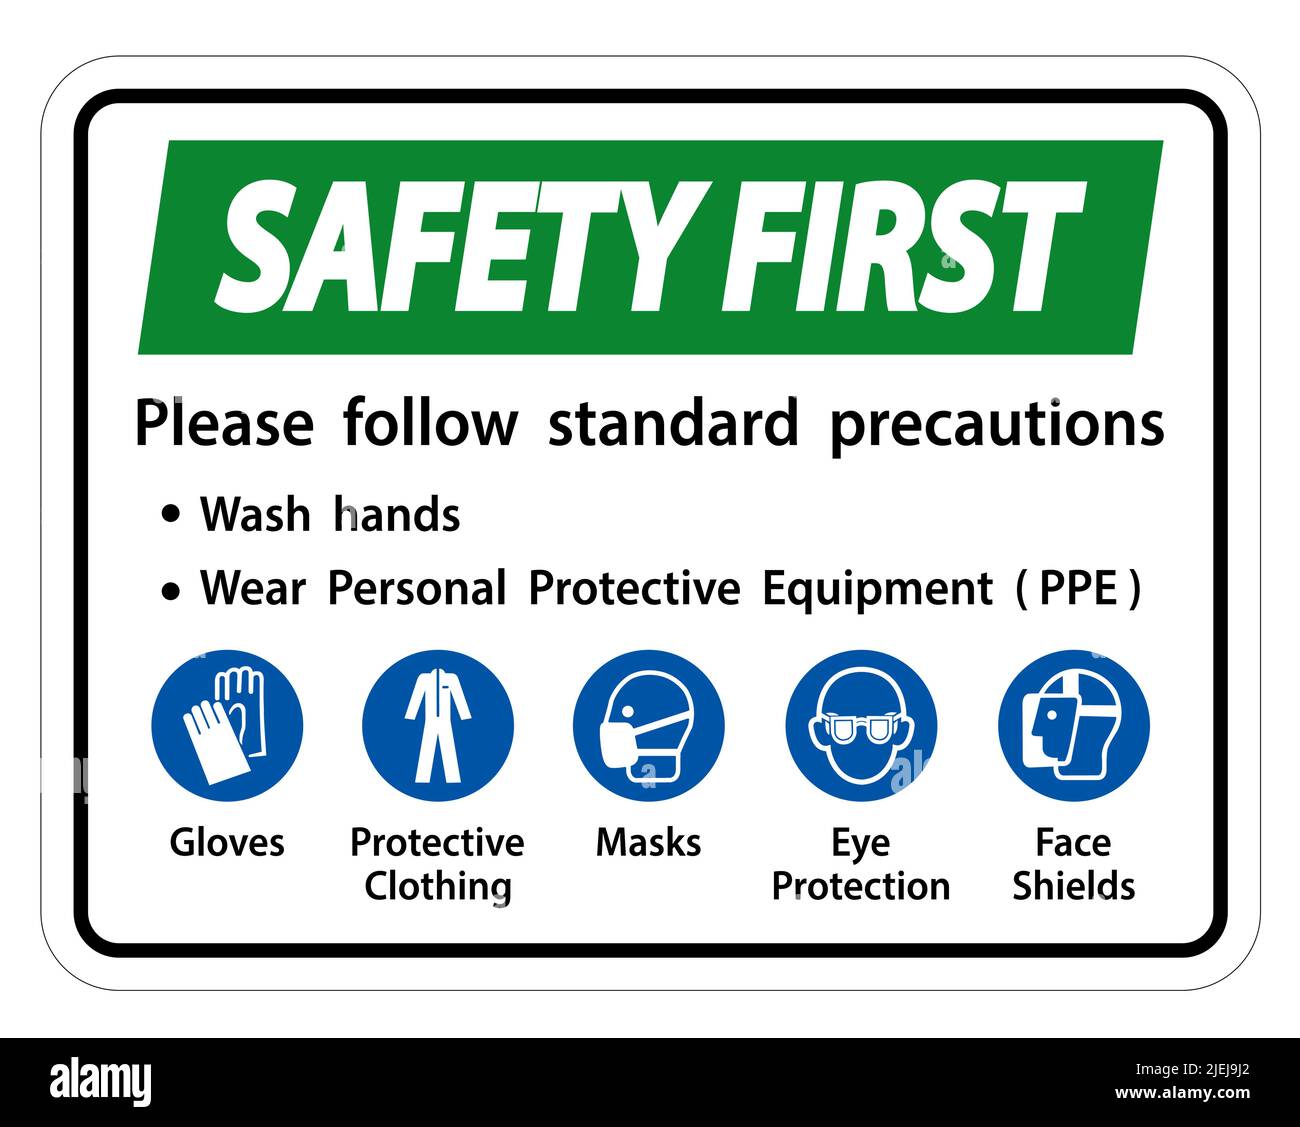 Safety First Please follow standard precautions ,Wash hands,Wear